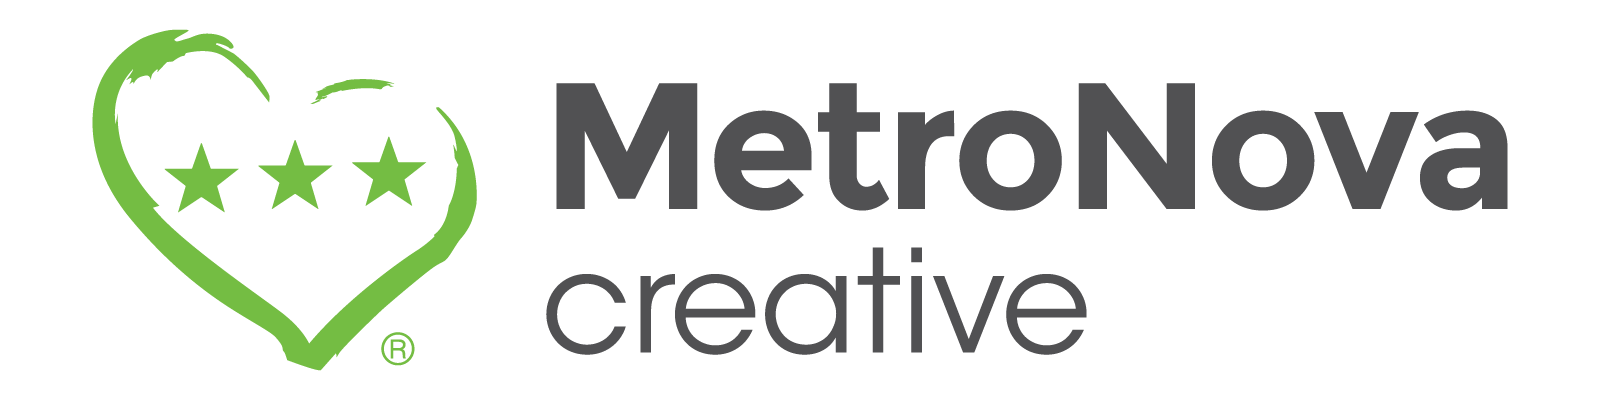 Metro Nova Creative Logo Web@2x